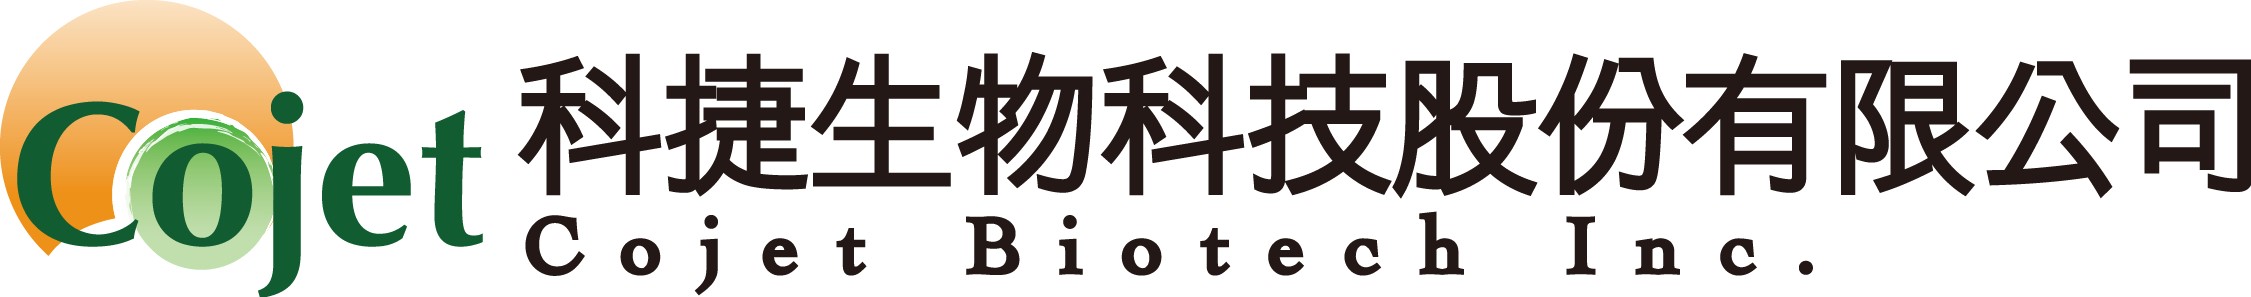 Cojet Biotech Inc.